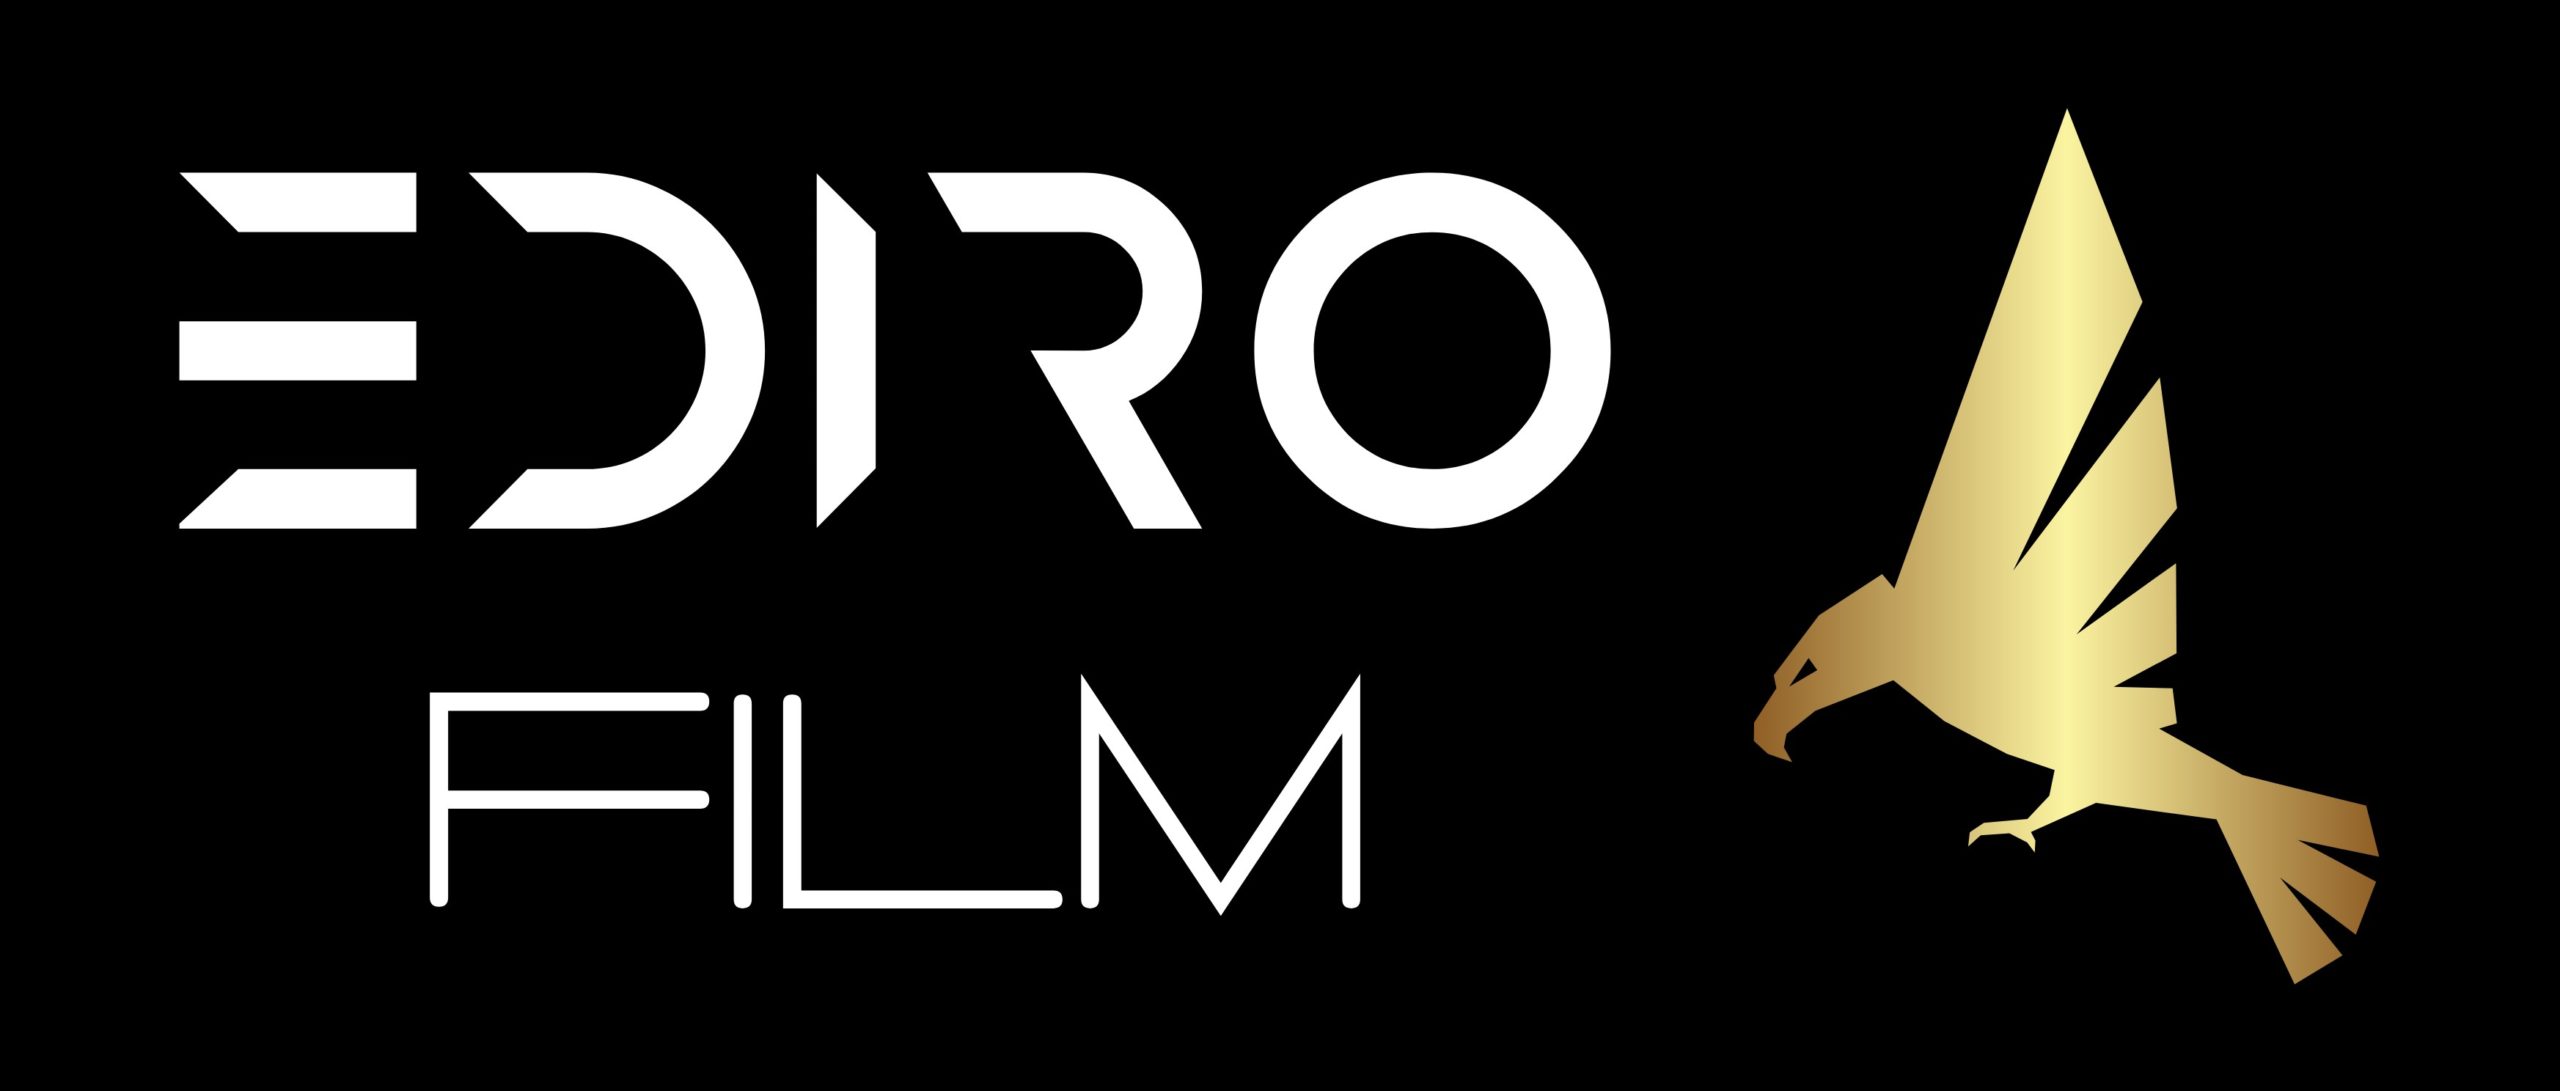 Ediro Film (dawniej Studio Filmowe N)